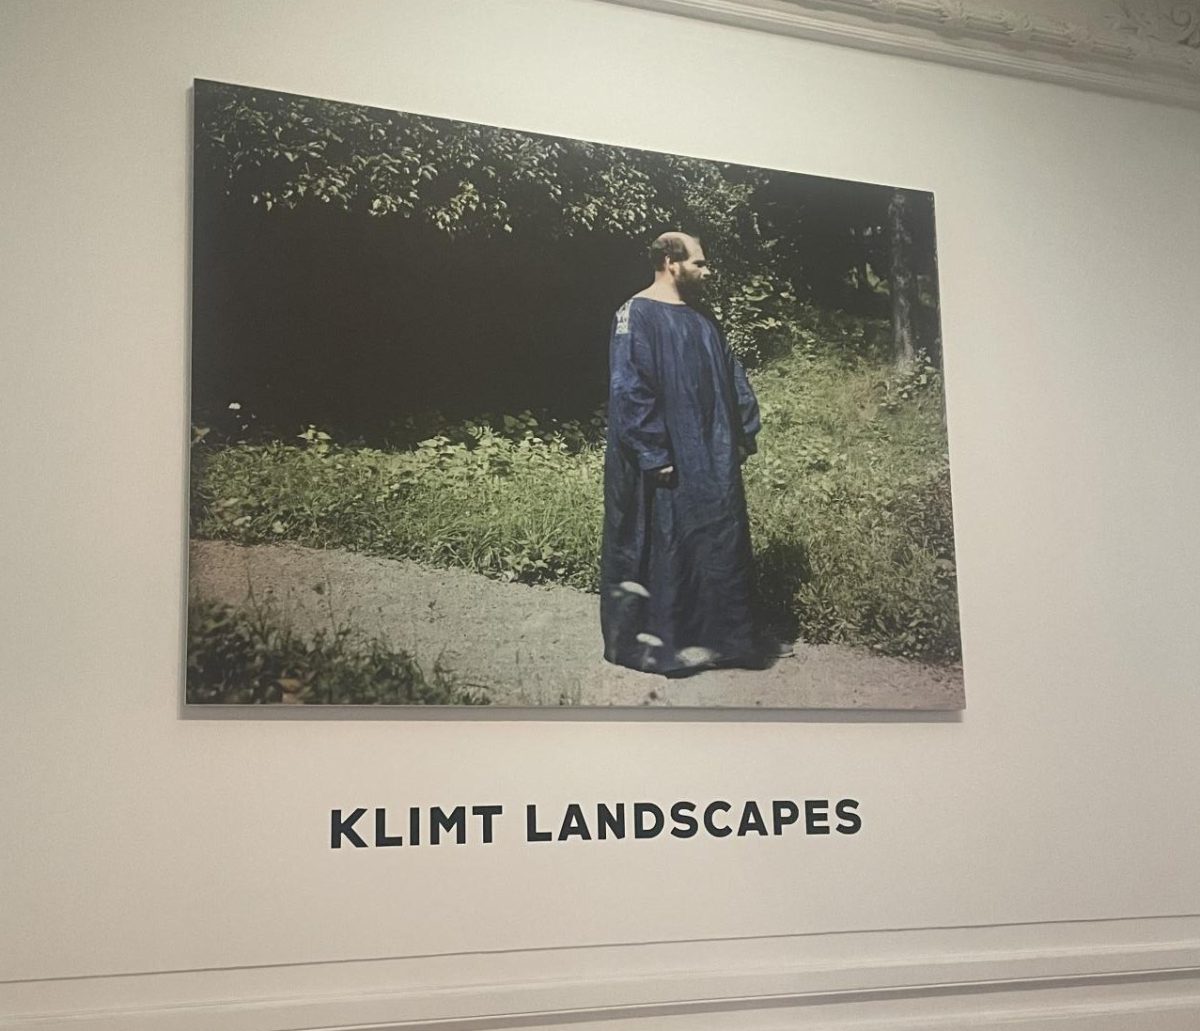 Klimt+Landscapes%2C+a+new+exhibition+at+the+Neue+Galerie%2C+delves+into+a+less+known+aspect+of+Klimts+works%2C+his+landscapes.+